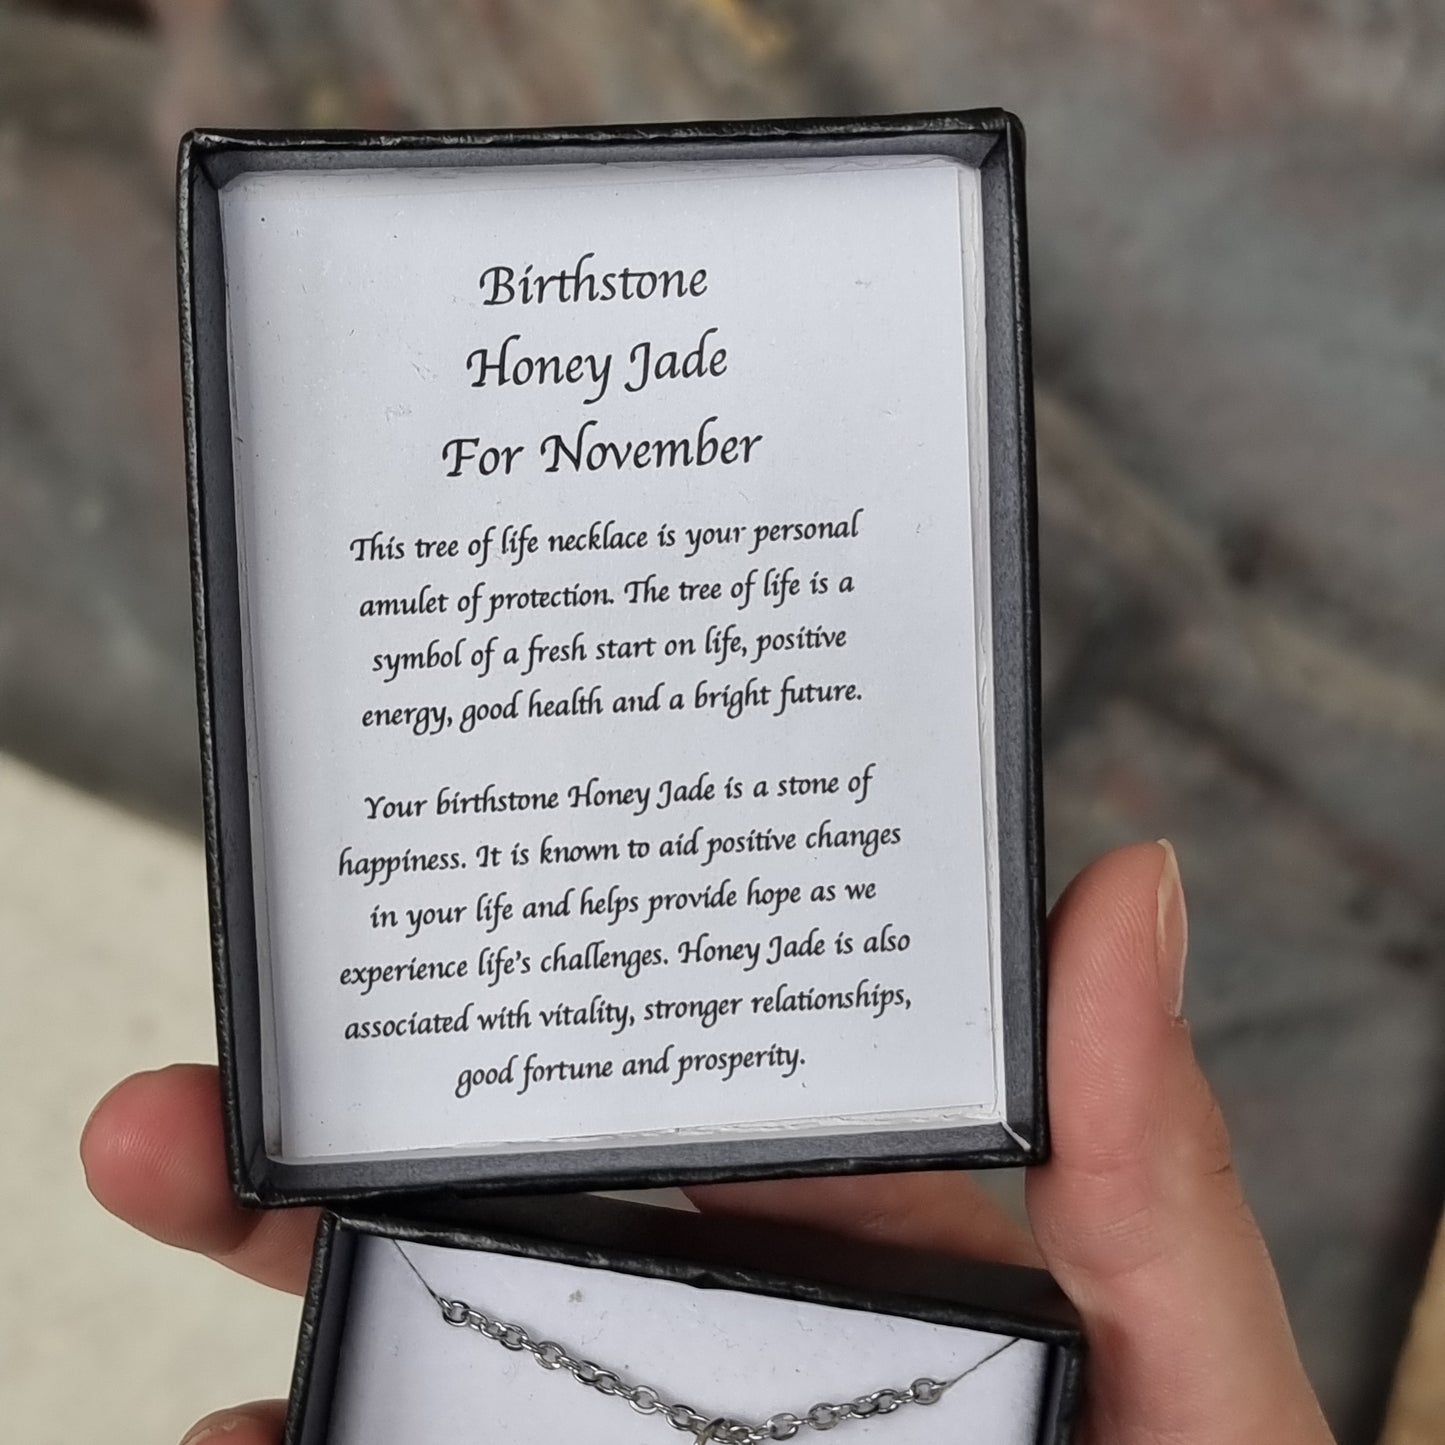 November birthstone pendant - Rivendell Shop